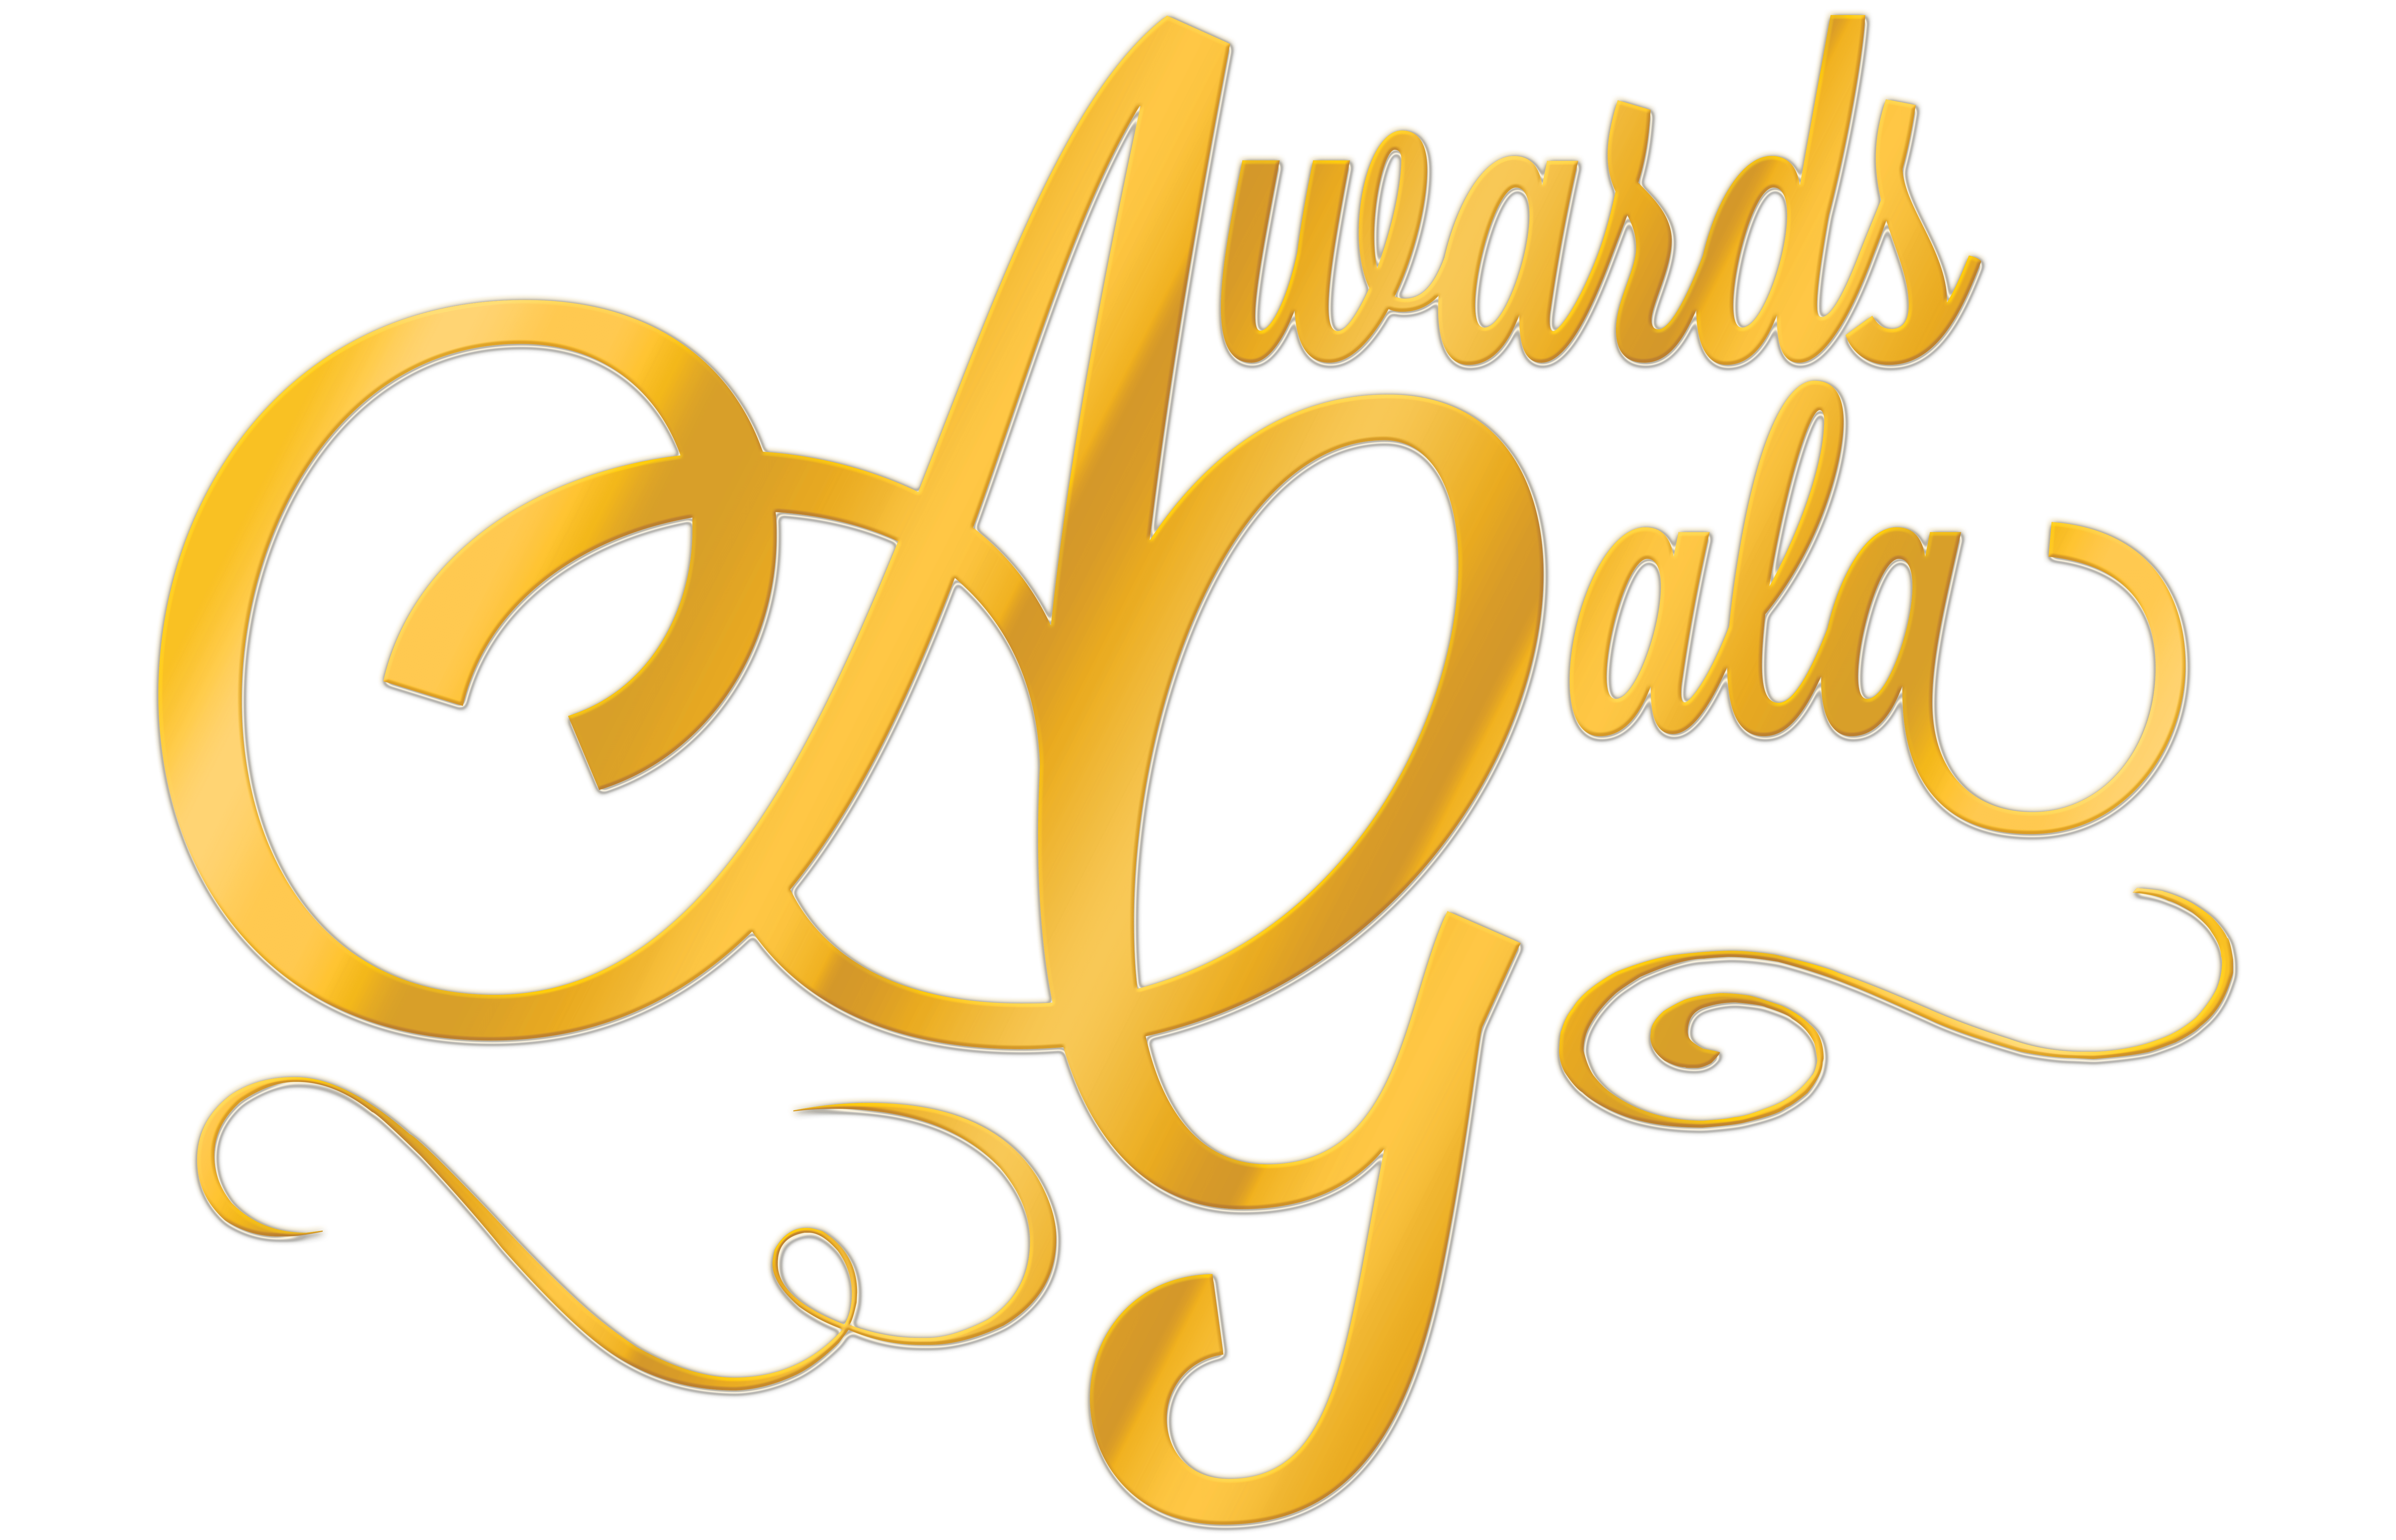 Logo for Awards Gala